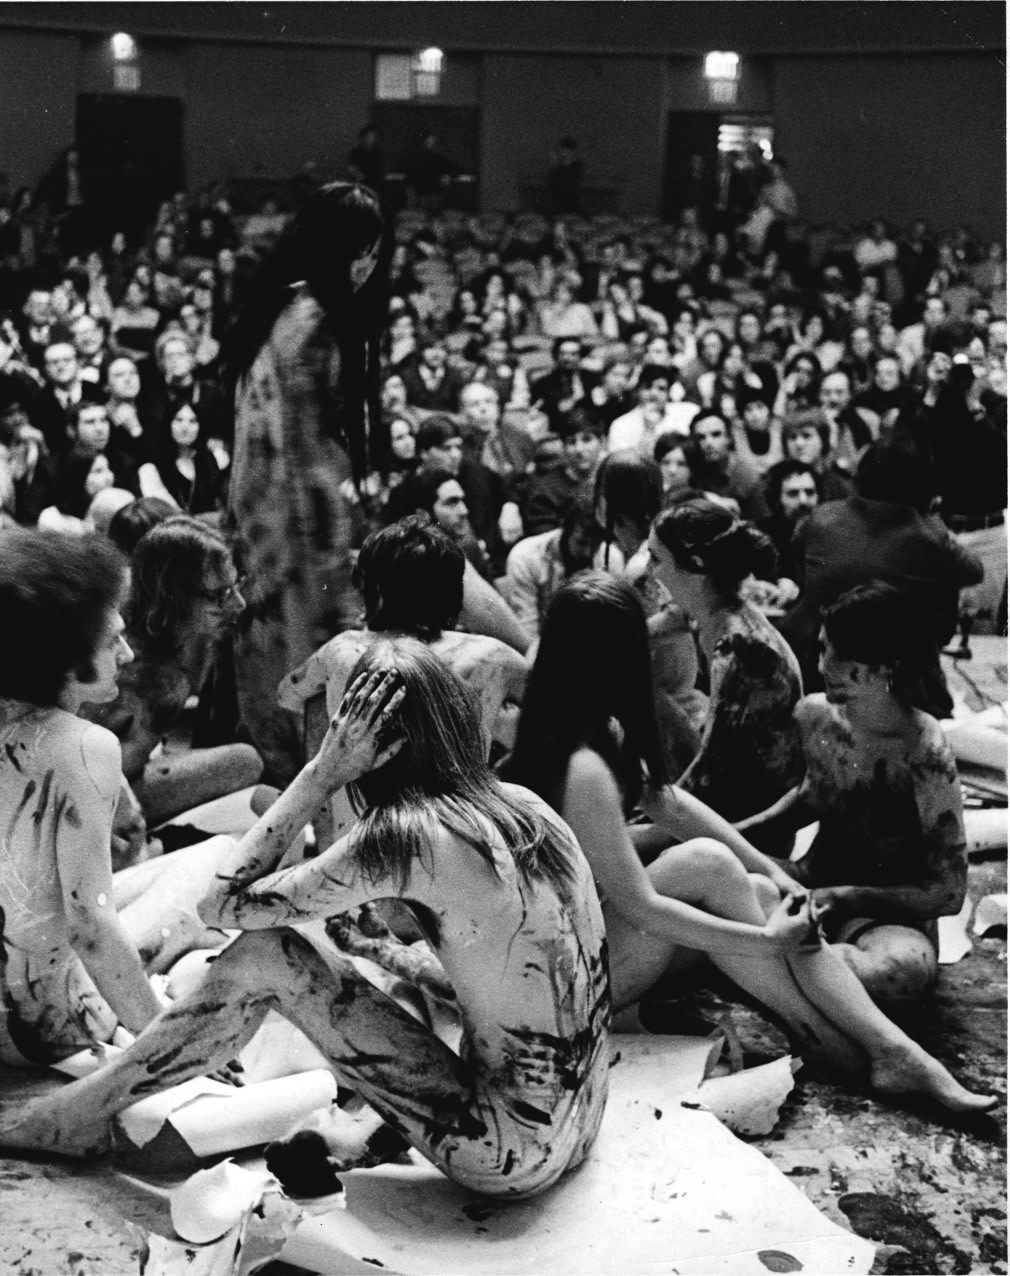 Yayoi Kusama Happening 1970 New School for Social Research, New York. © Yayoi Kusama